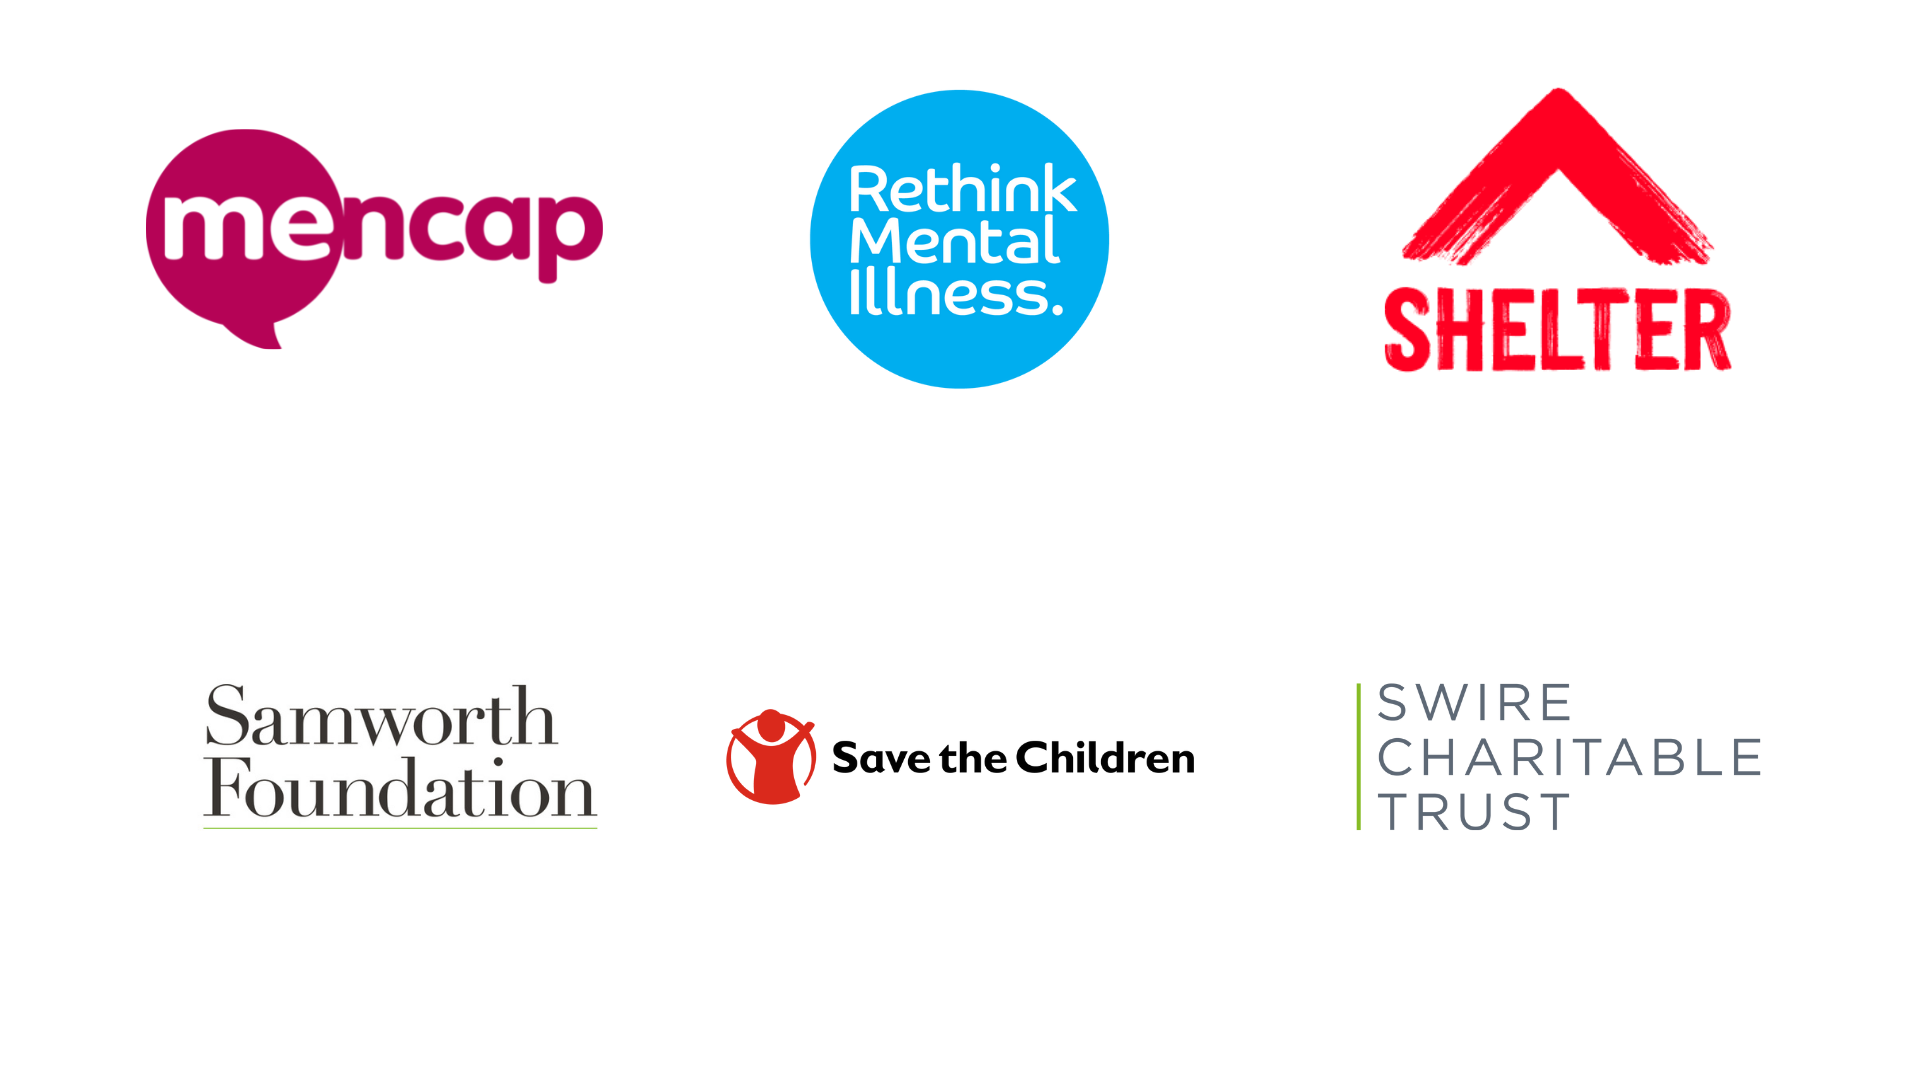 Image shows the logos of Mencap, Rethink Mental Illness, Shelter, Samworth Foundation, Save the Children, Swire Charitable Trust